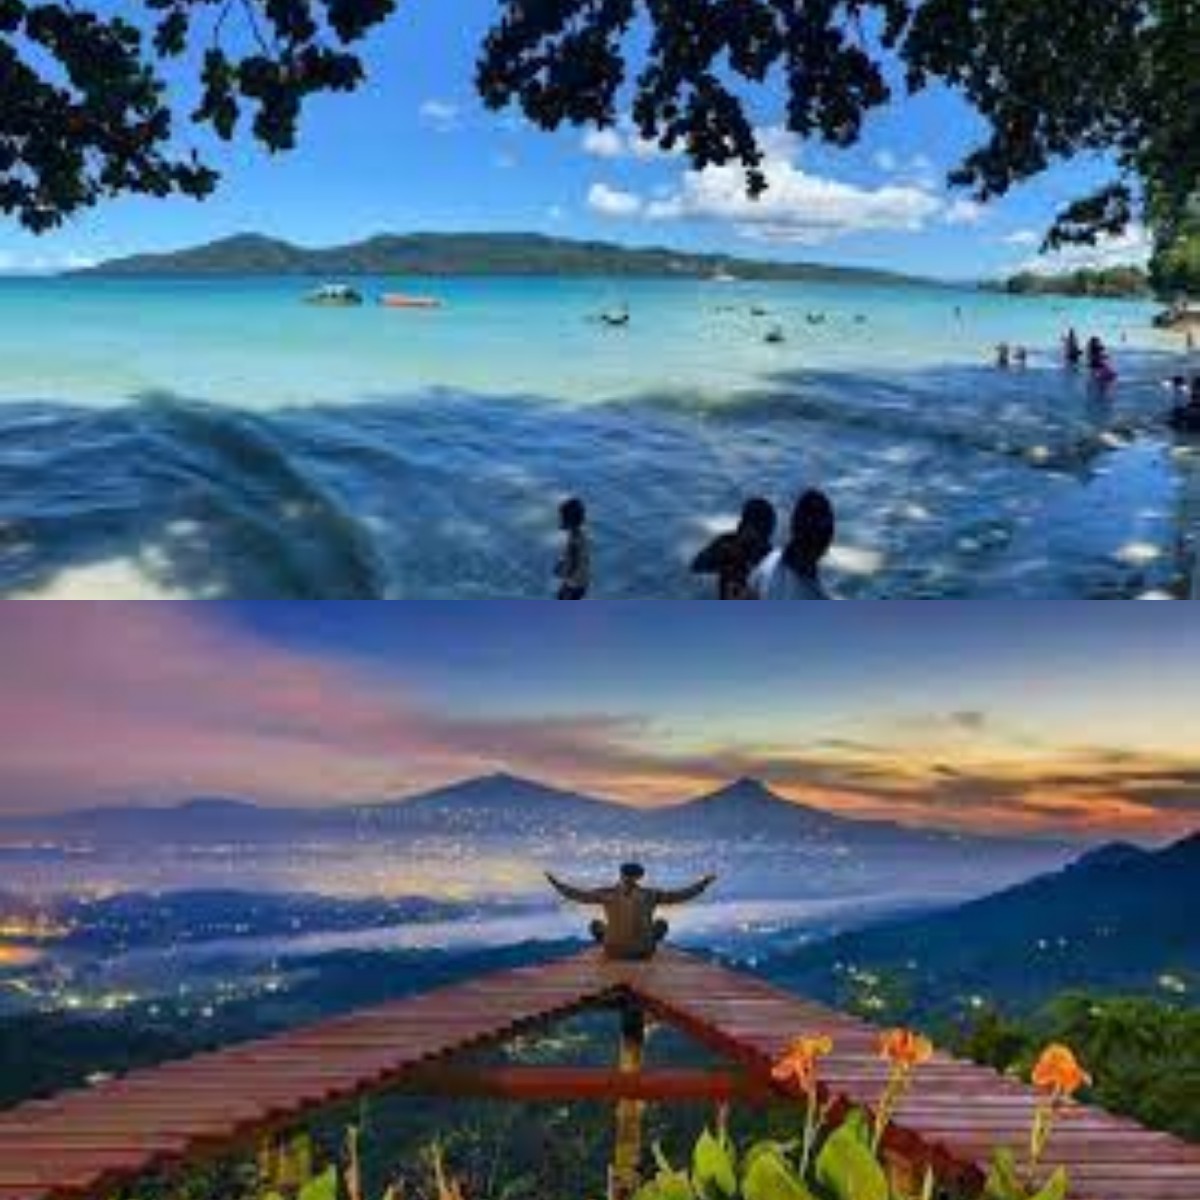 Sambut Bulan Puasa dengan Ngabuburit di Wisata Ambon yang Miliki Pesona Cantik 